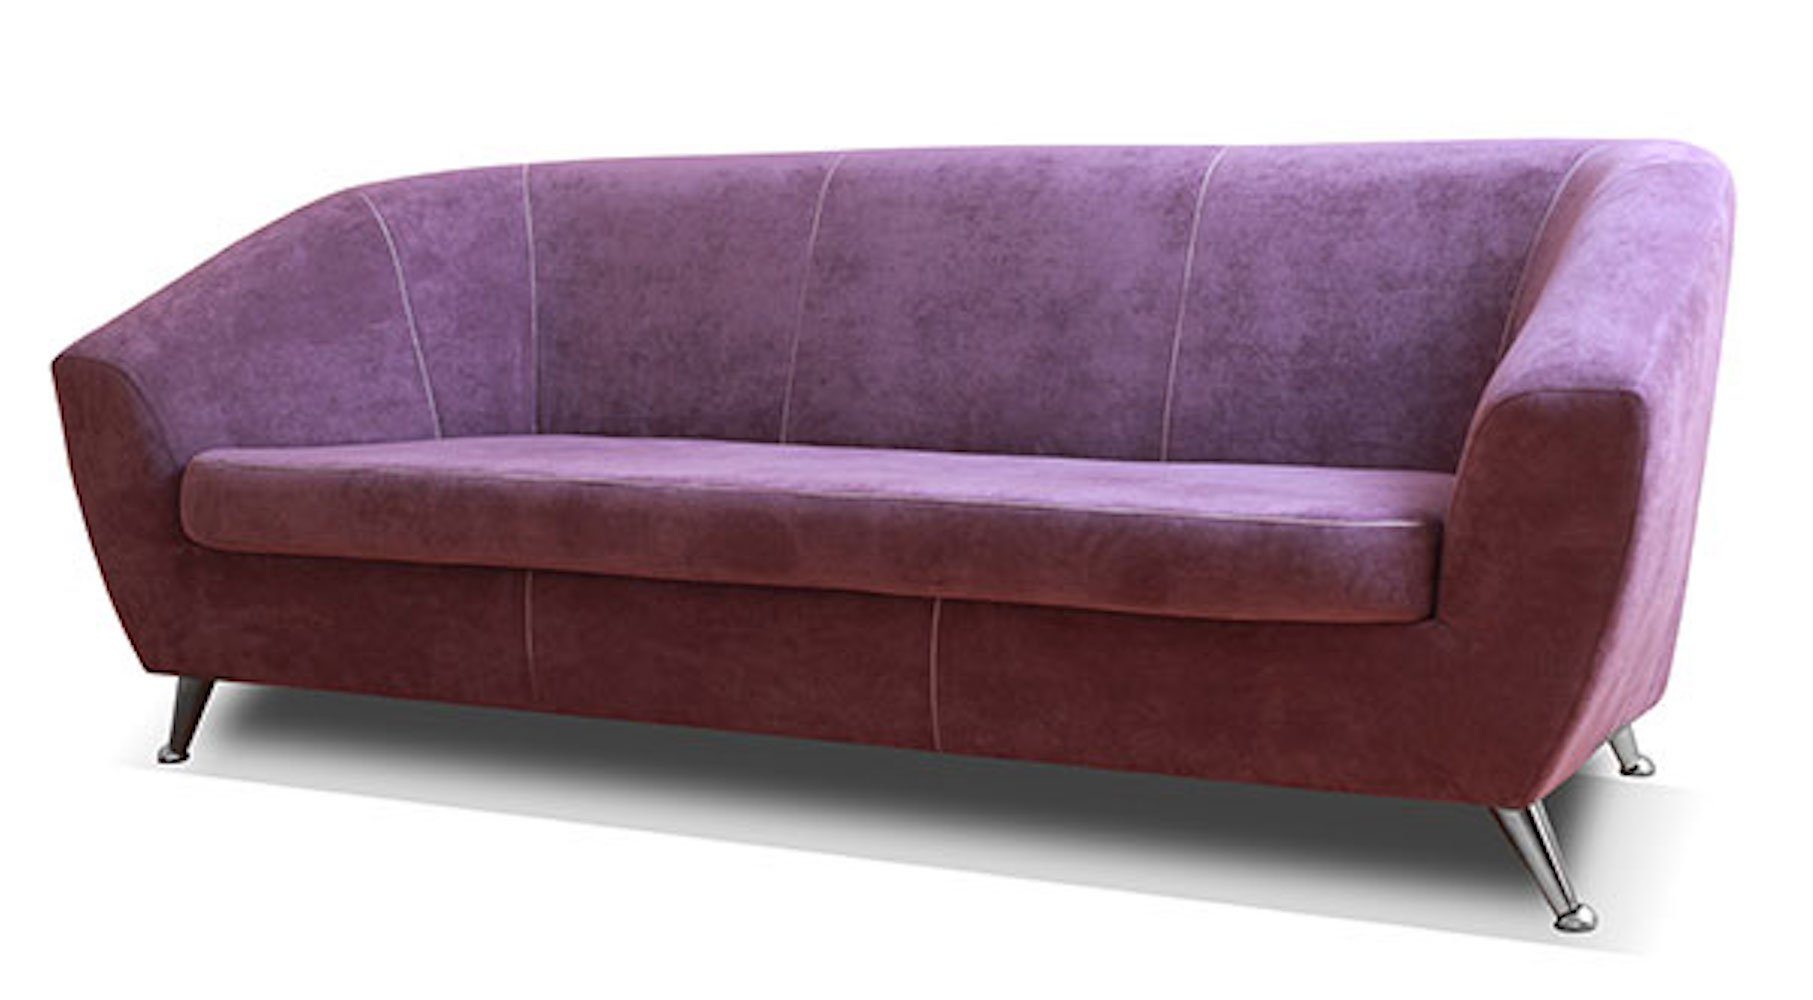 Lira, grau (Orinoco Sofa 95) wählbar mit Wellenunterfederung Farbe Feldmann-Wohnen 202cm